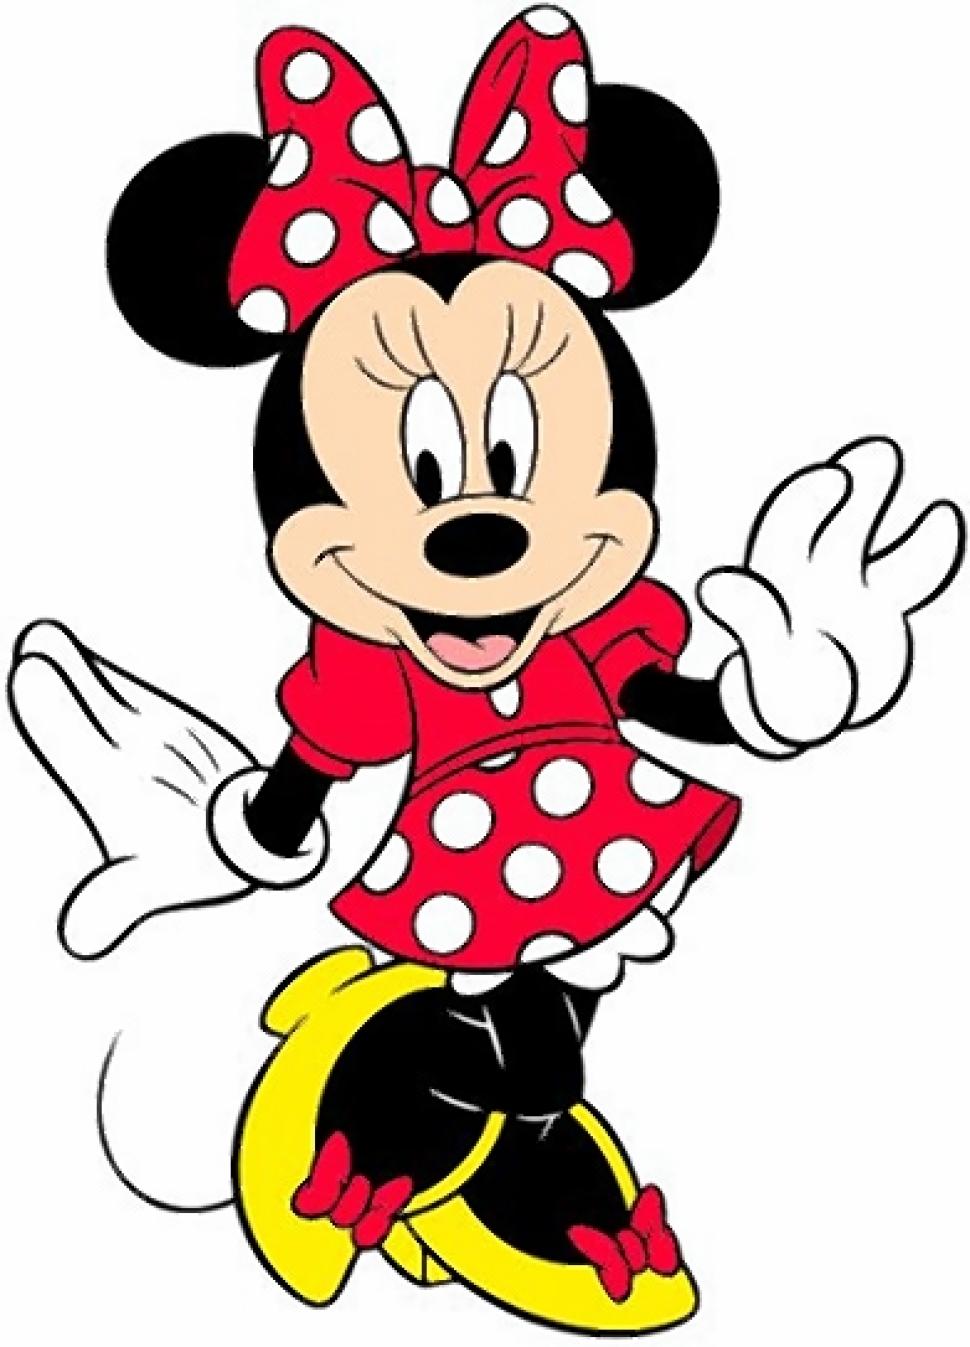 Skinny Minnie: Slimmed-down Disney toon sparks outrage - NY Daily News